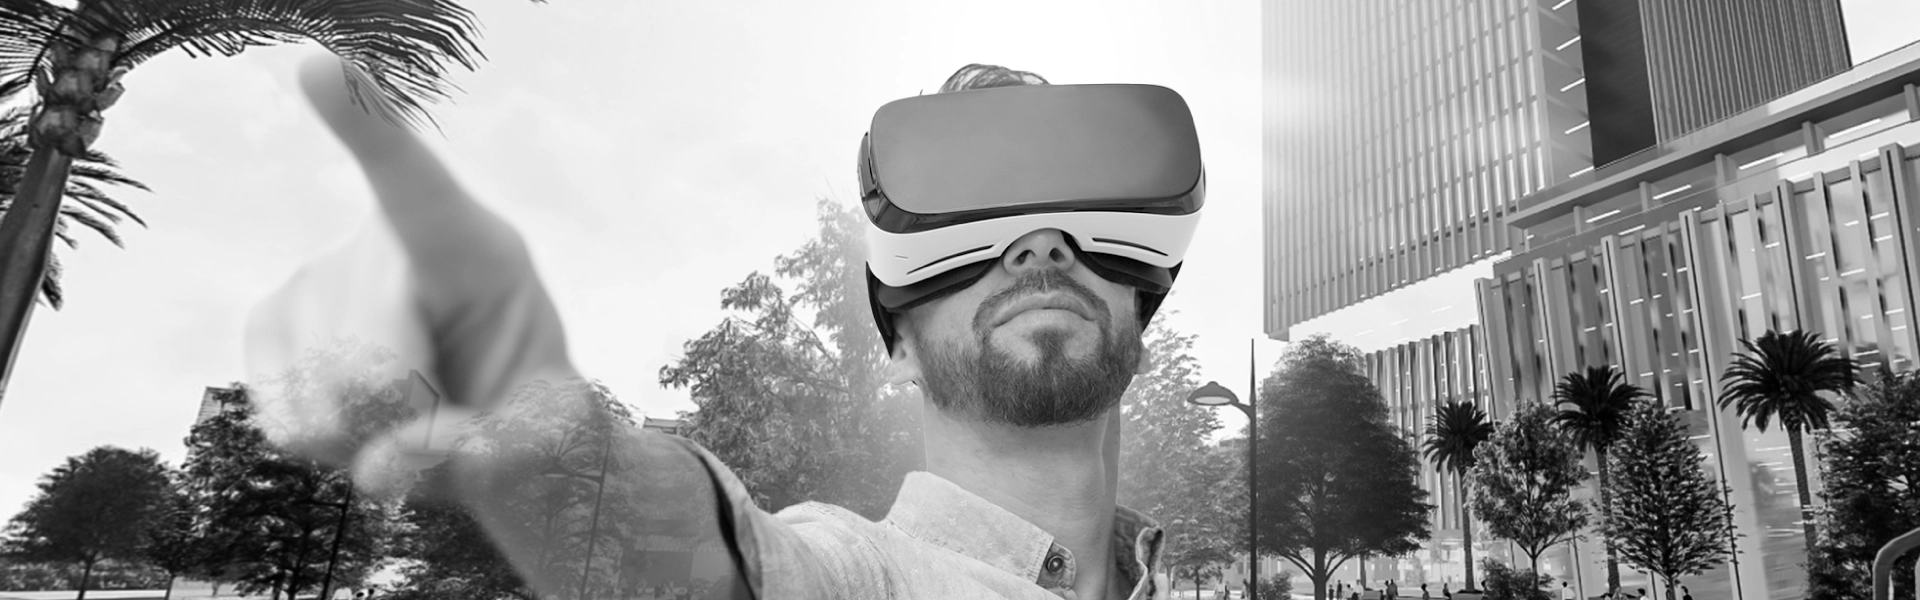 man using virtual reality glasses